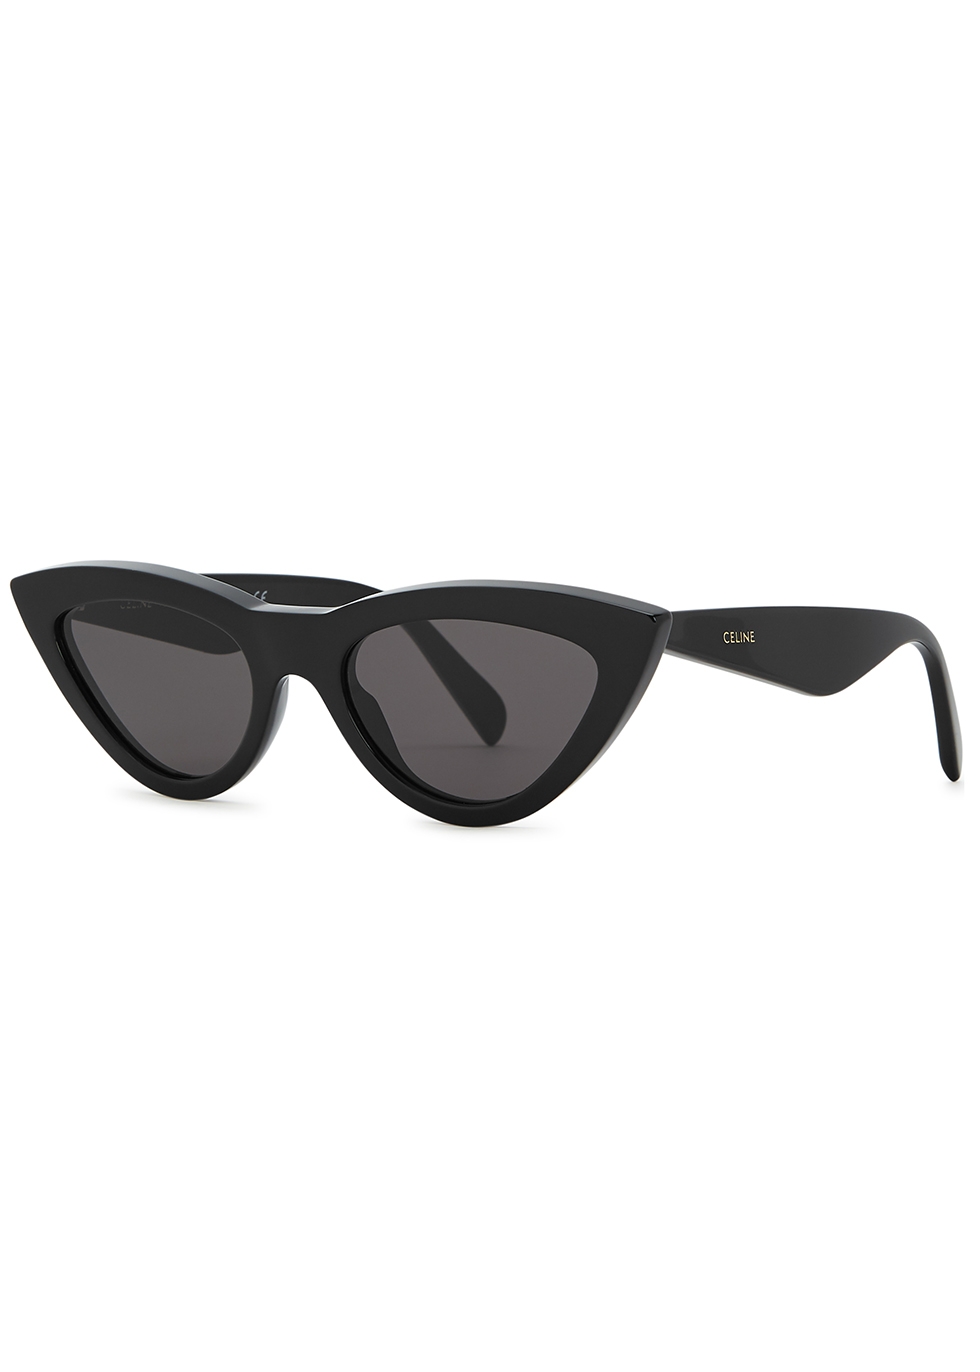 Fabris Lane Homme Mens Designer Sunglasses FLA101762 Black New RRP £49 